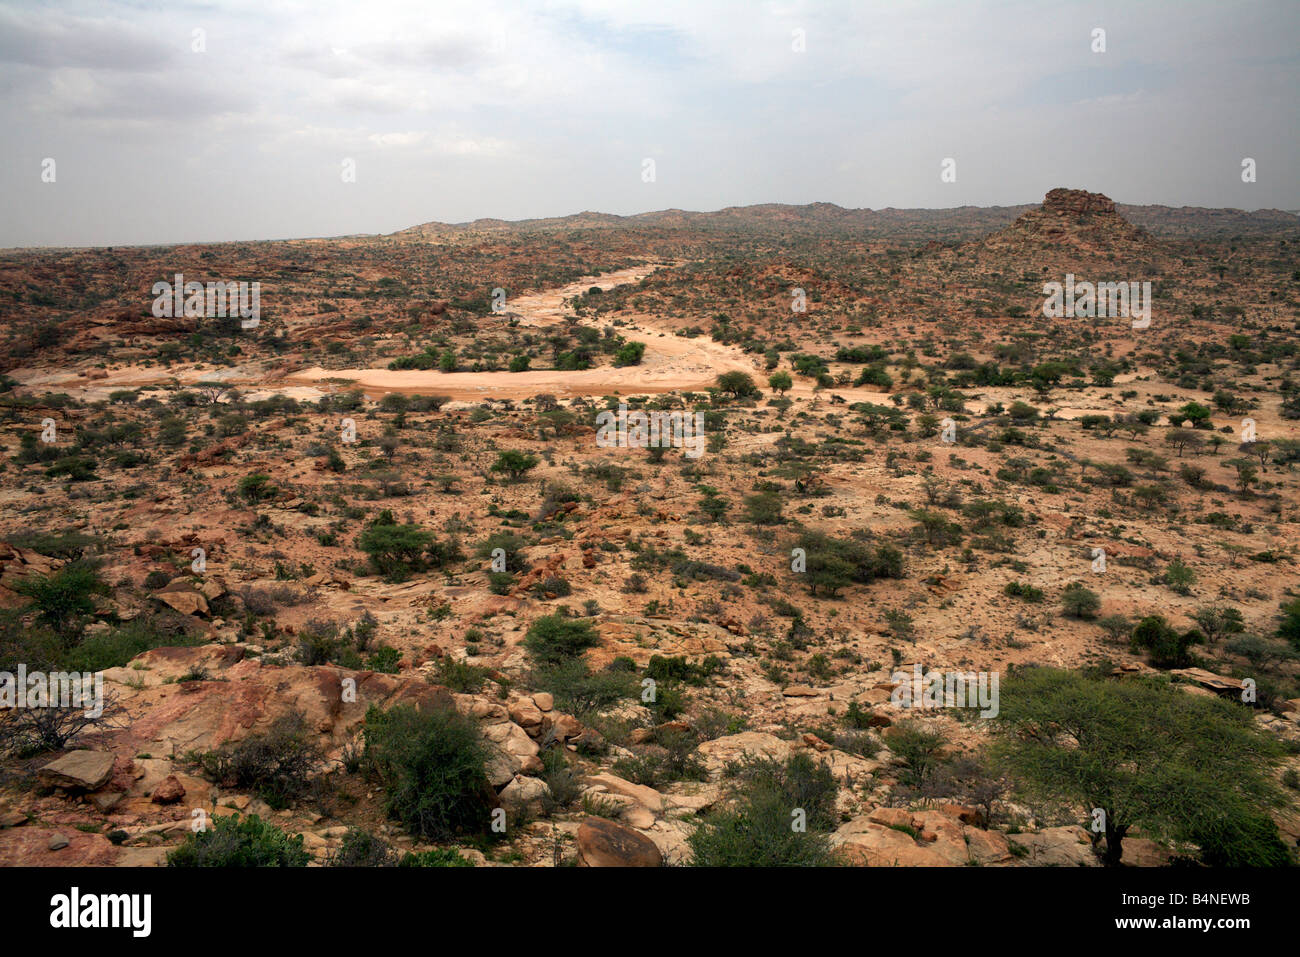 Desert of Somaliland, Somalia Stock Photo